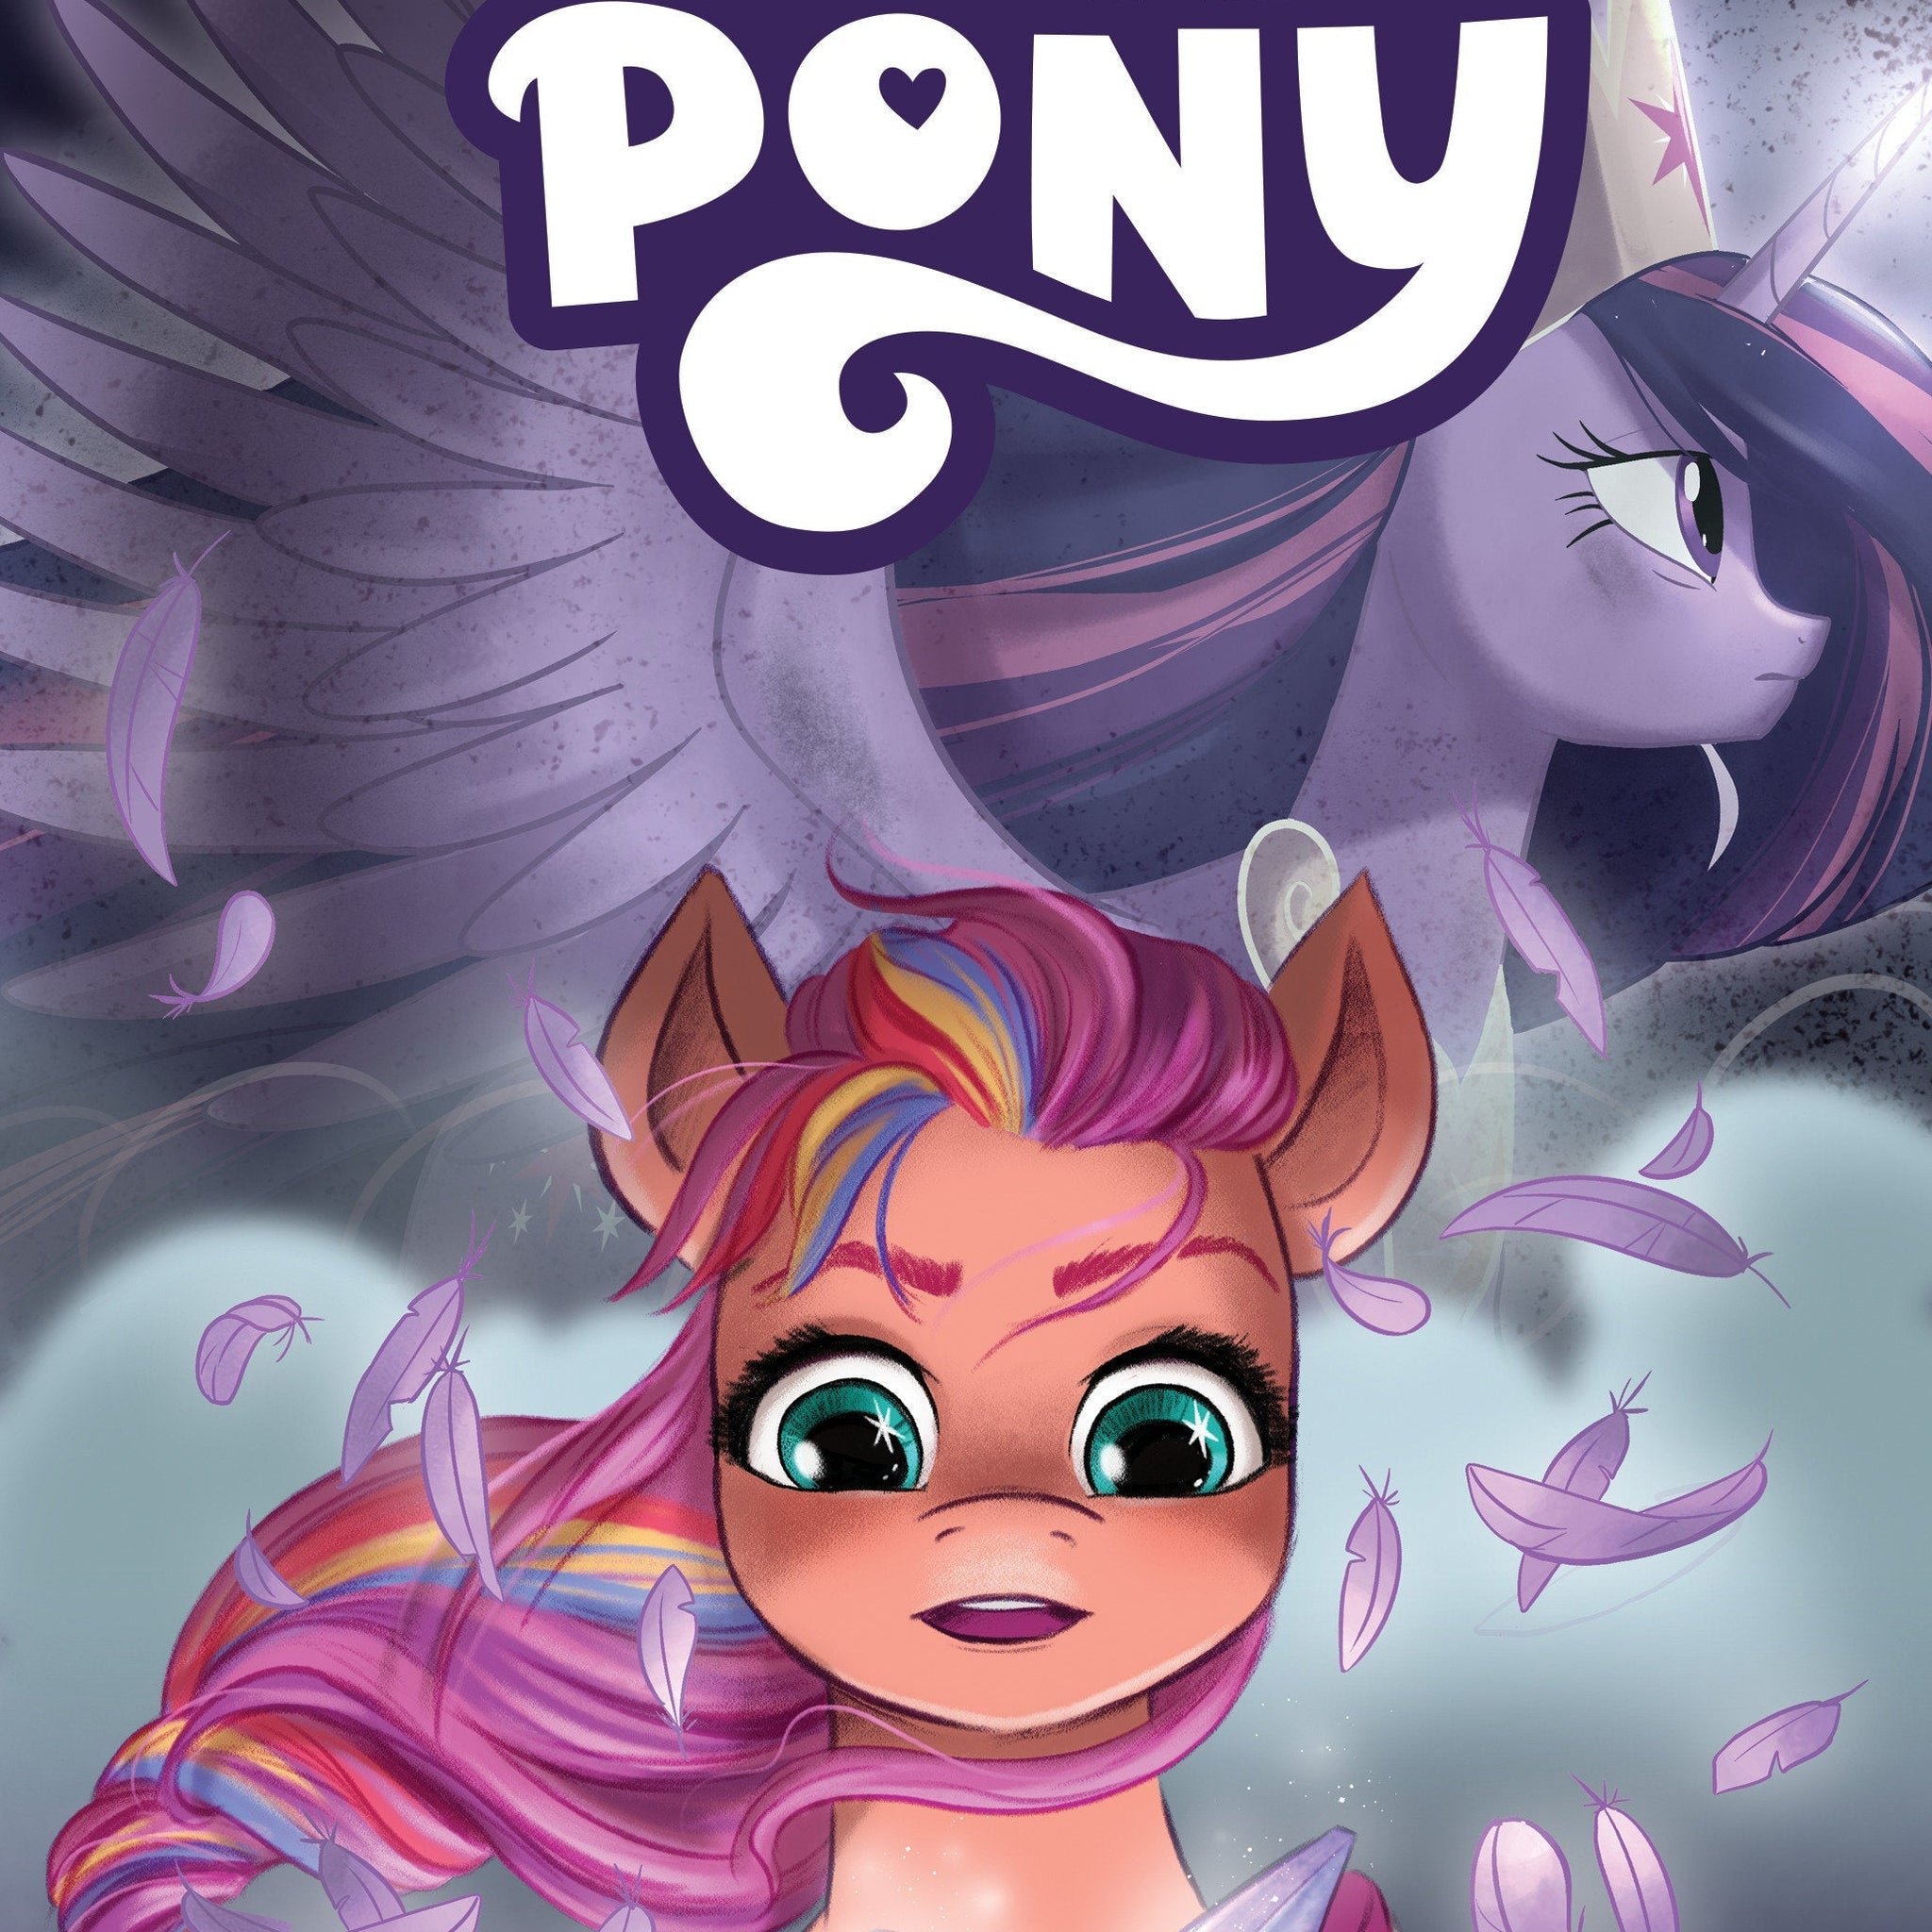  My Little Pony #6 (11/02/2022)- CVR (Main) Amy Mebberson, CVR (Variant) JustaSuta, CVR (Variant) 1:10 Trish Forstner- IDW PUBLISHING- Coinz Comics 